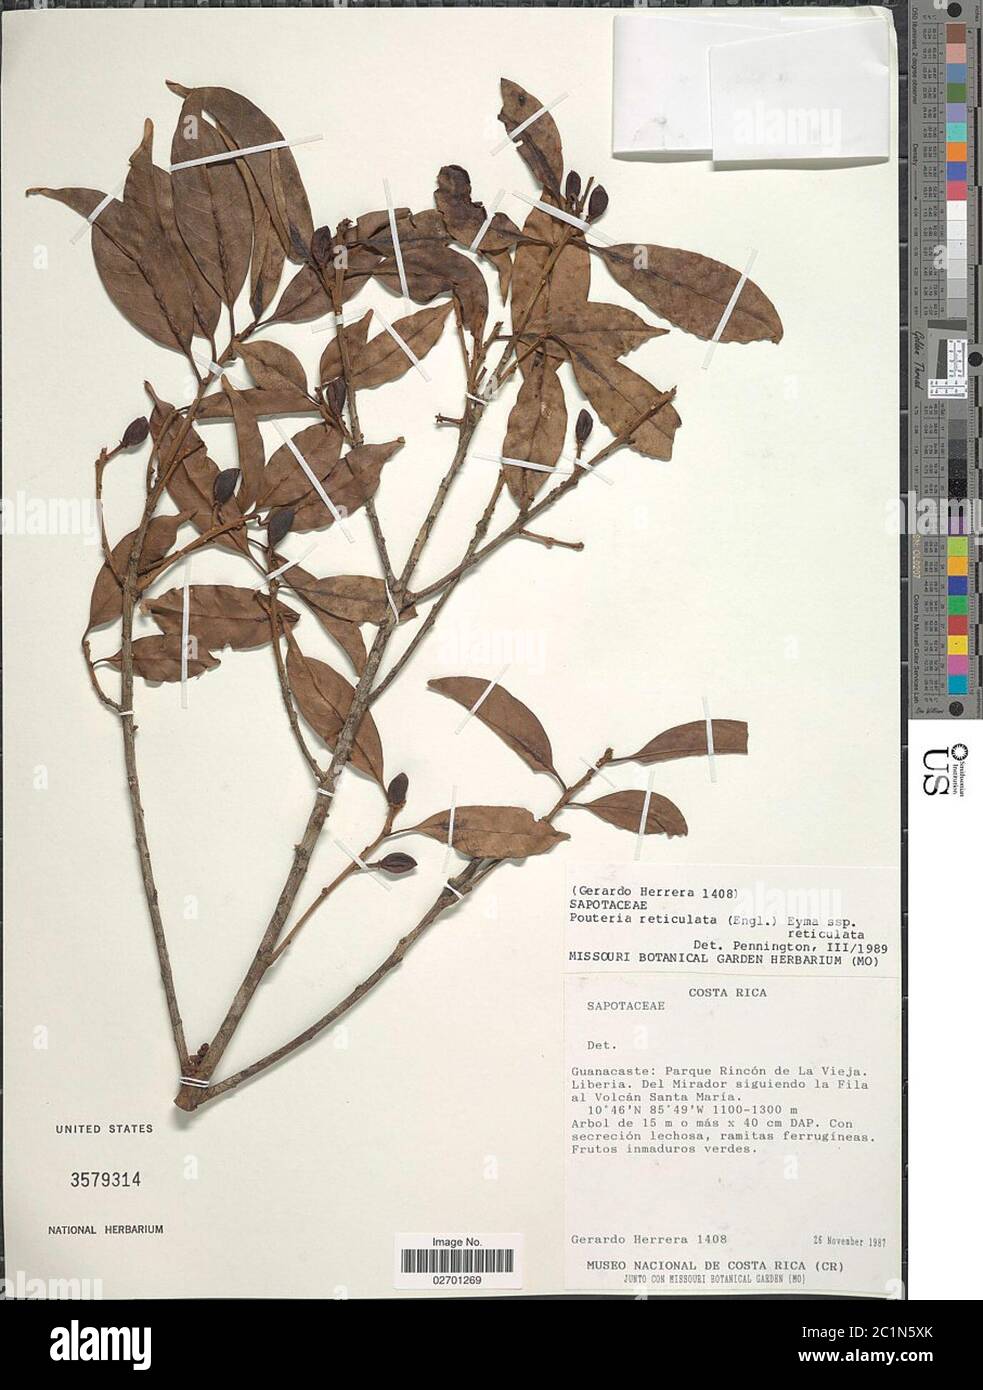 Pouteria reticulata Engl Eyma Pouteria reticulata Engl Eyma. Stock Photo